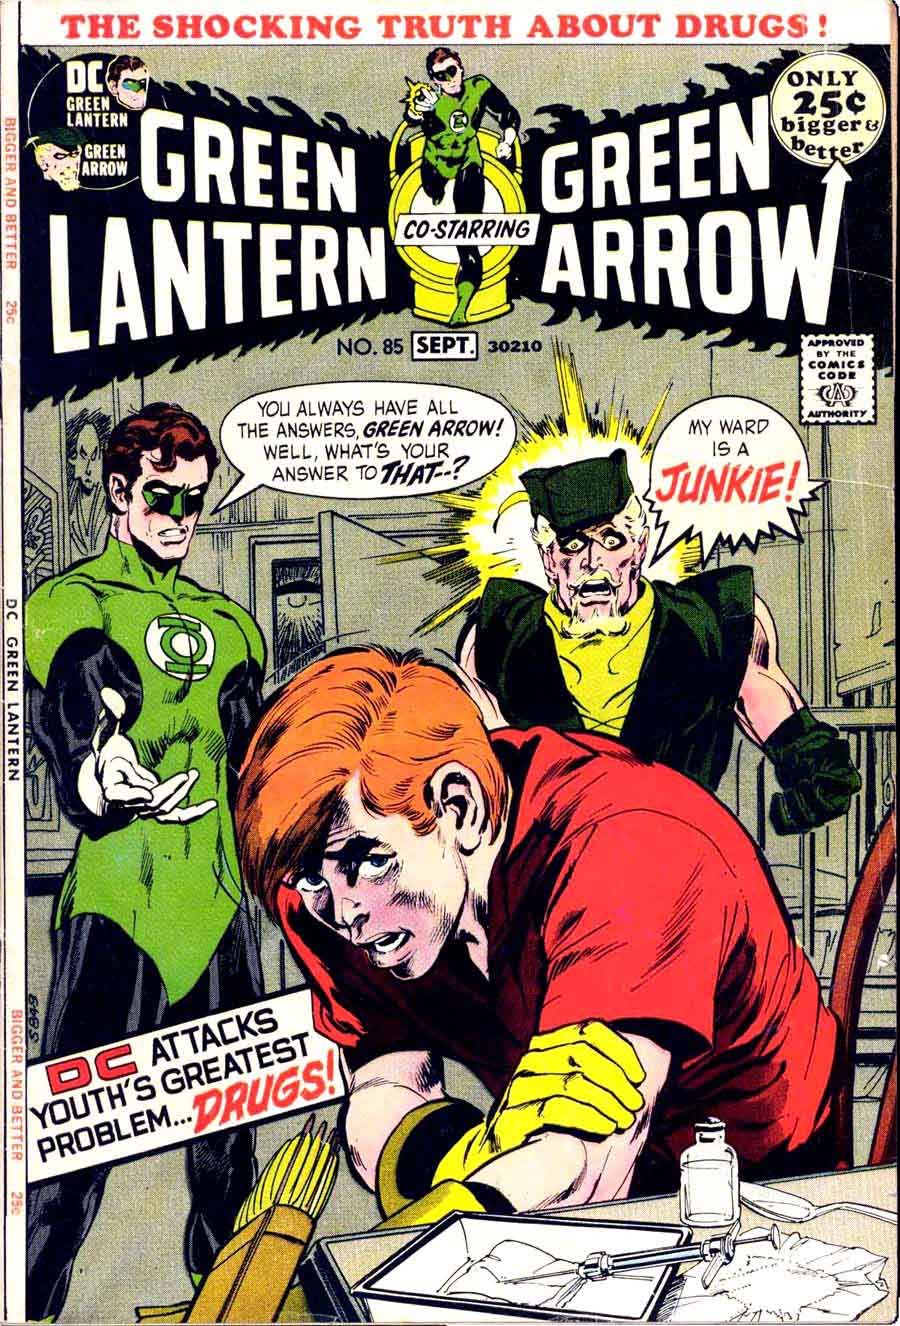 Green Lantern Green Arrow #85 bronze age 1970s dc drug comic book cover